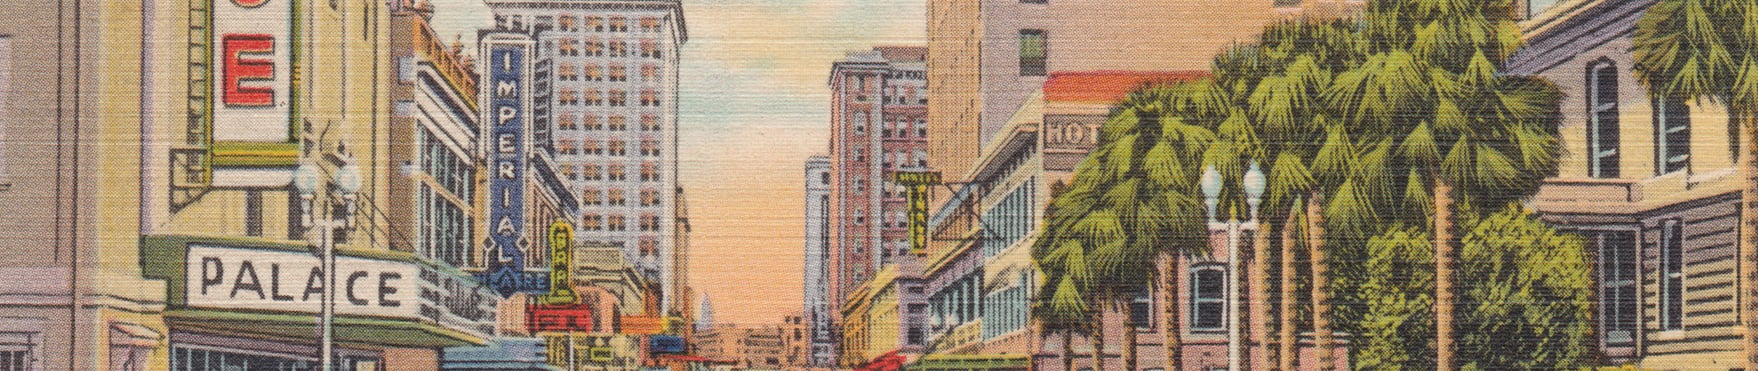 jacksonville-downtown-vintage-banner1.jpg